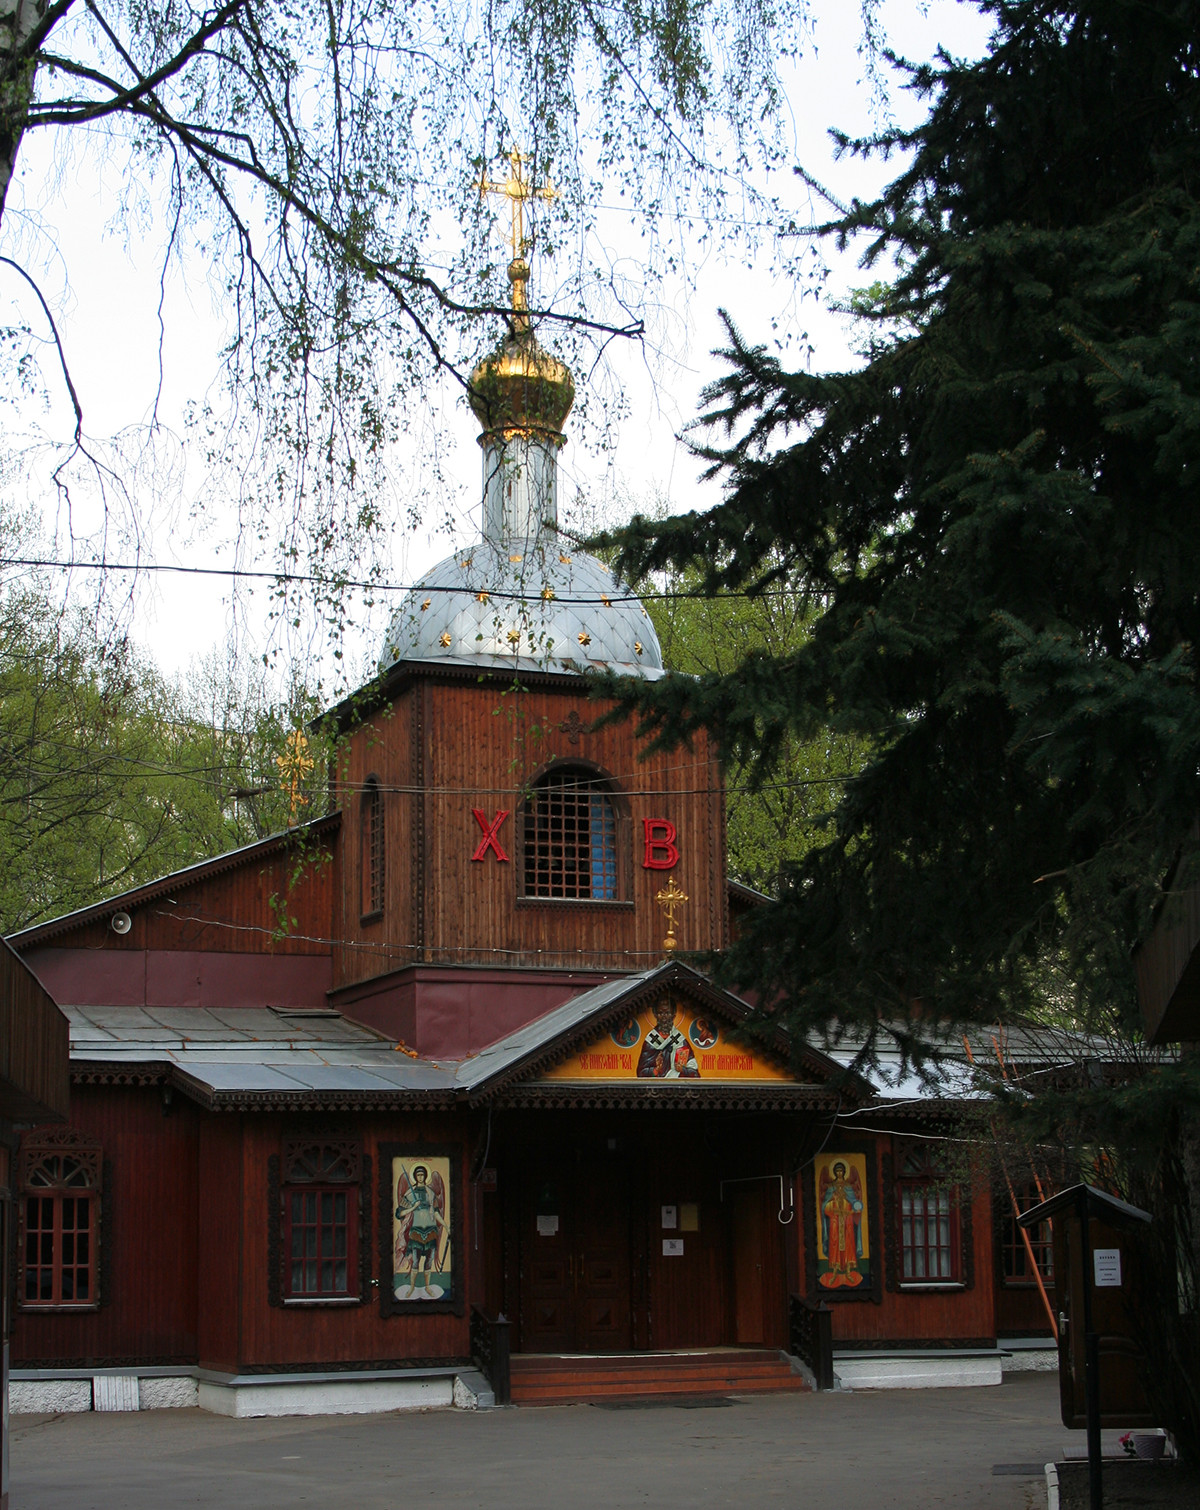 Church of St. Nicholas in Biryulyovo, Moscow, built in 1956